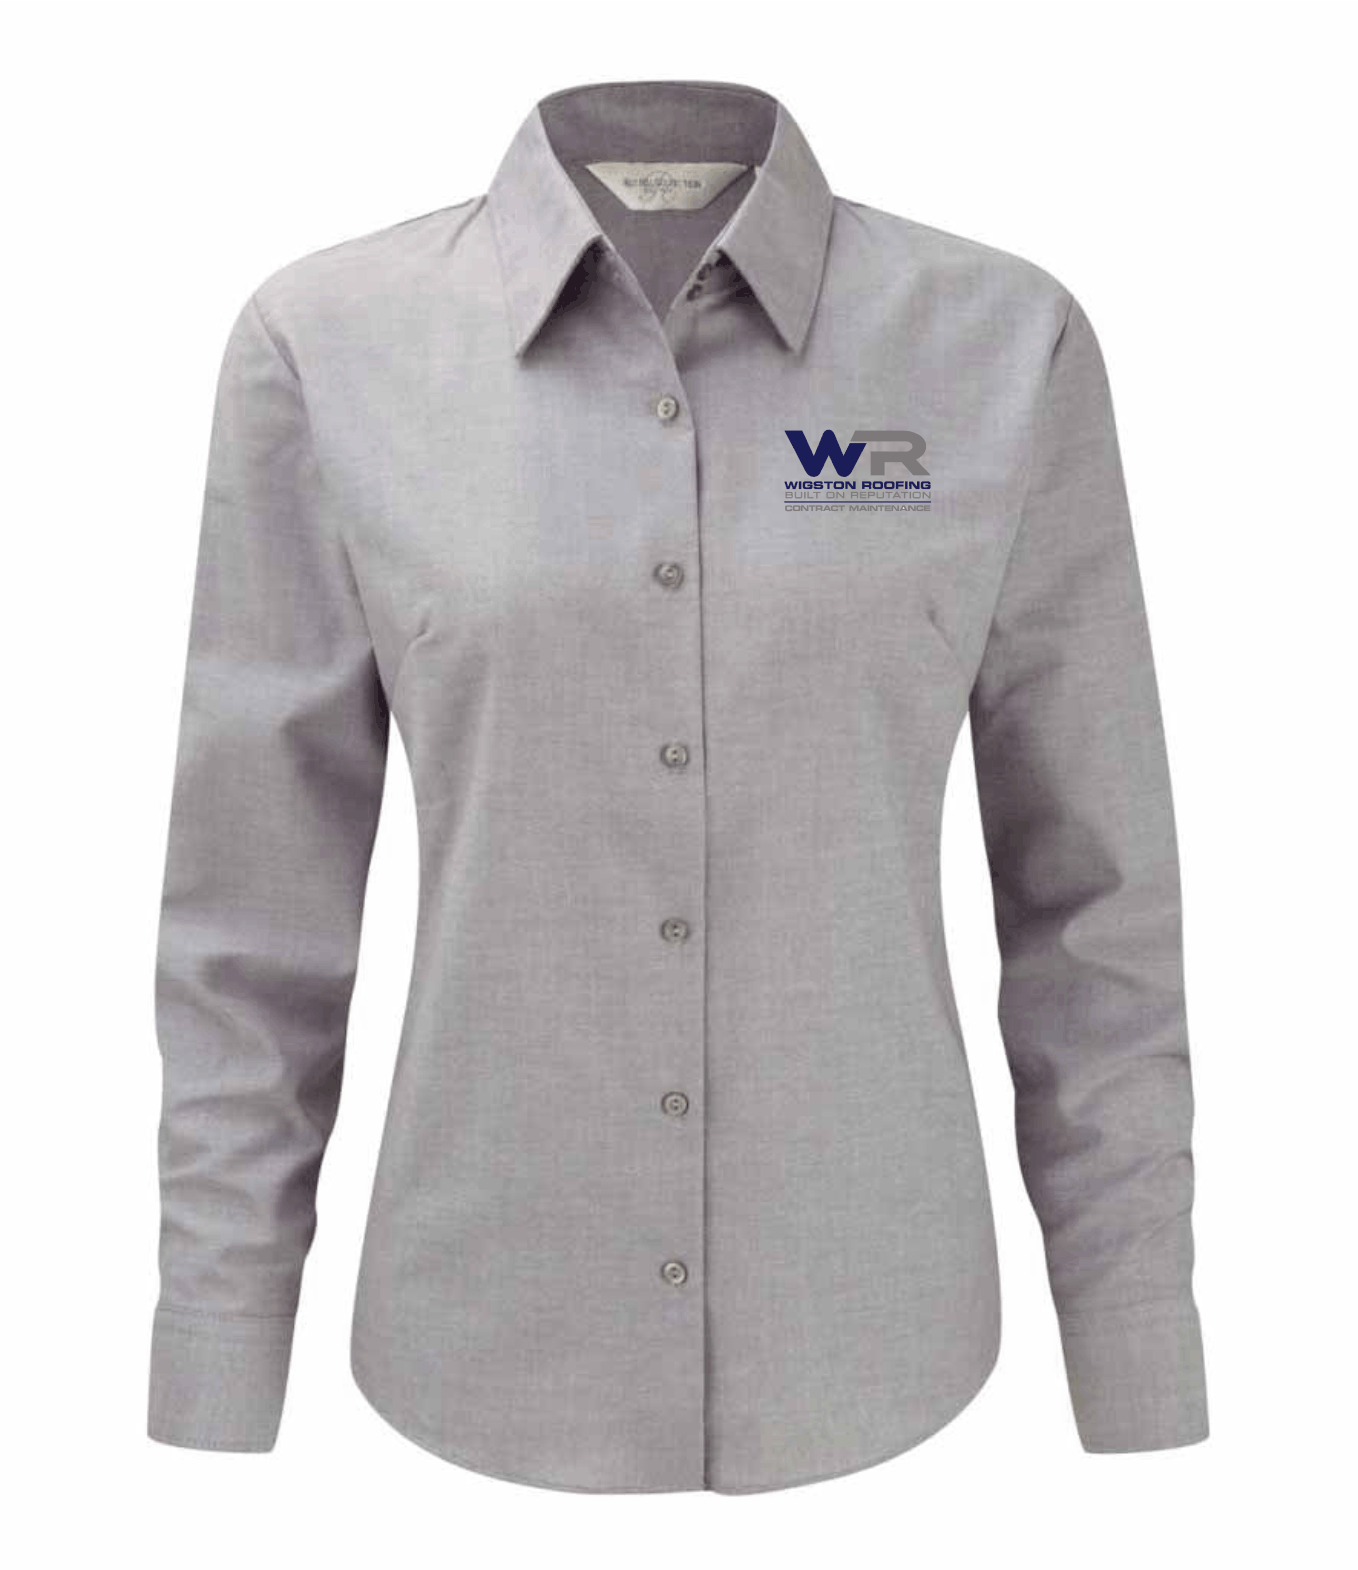 Wigston Roofing - Ladies Long Sleeve Shirt (R932F)